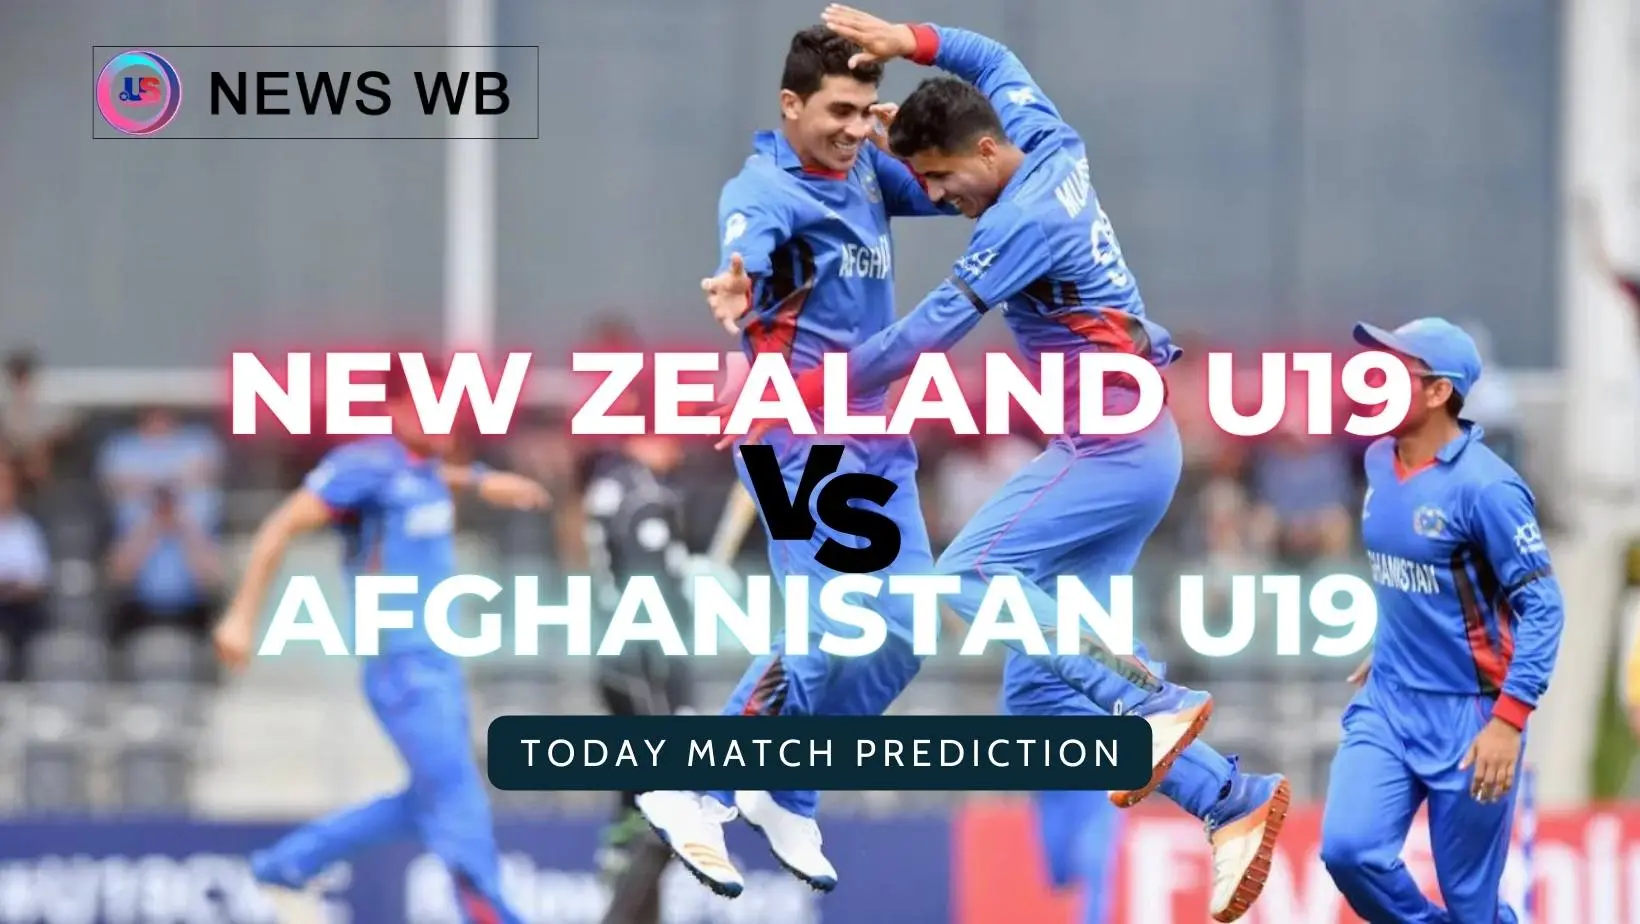 Today Match Prediction: NZ U19 vs AFG U19 Dream11 Team, New Zealand U19 vs Afghanistan U19 11th Match, Group D, Who Will Win?